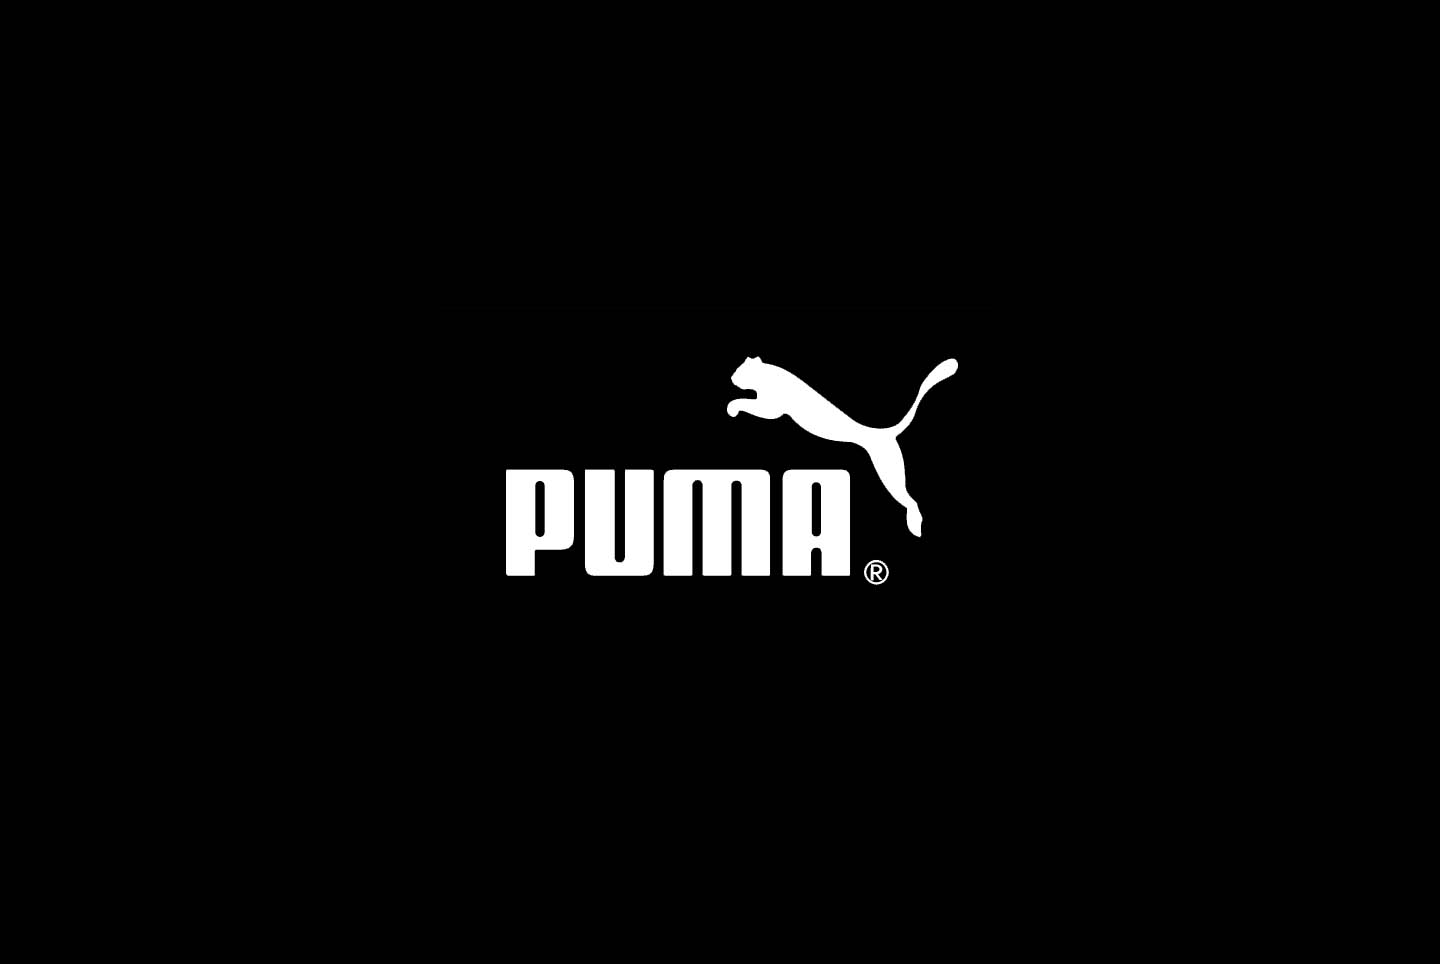 Puma Logo Wallpaper 5298 Hd Wallpapers in Logos   Imagescicom